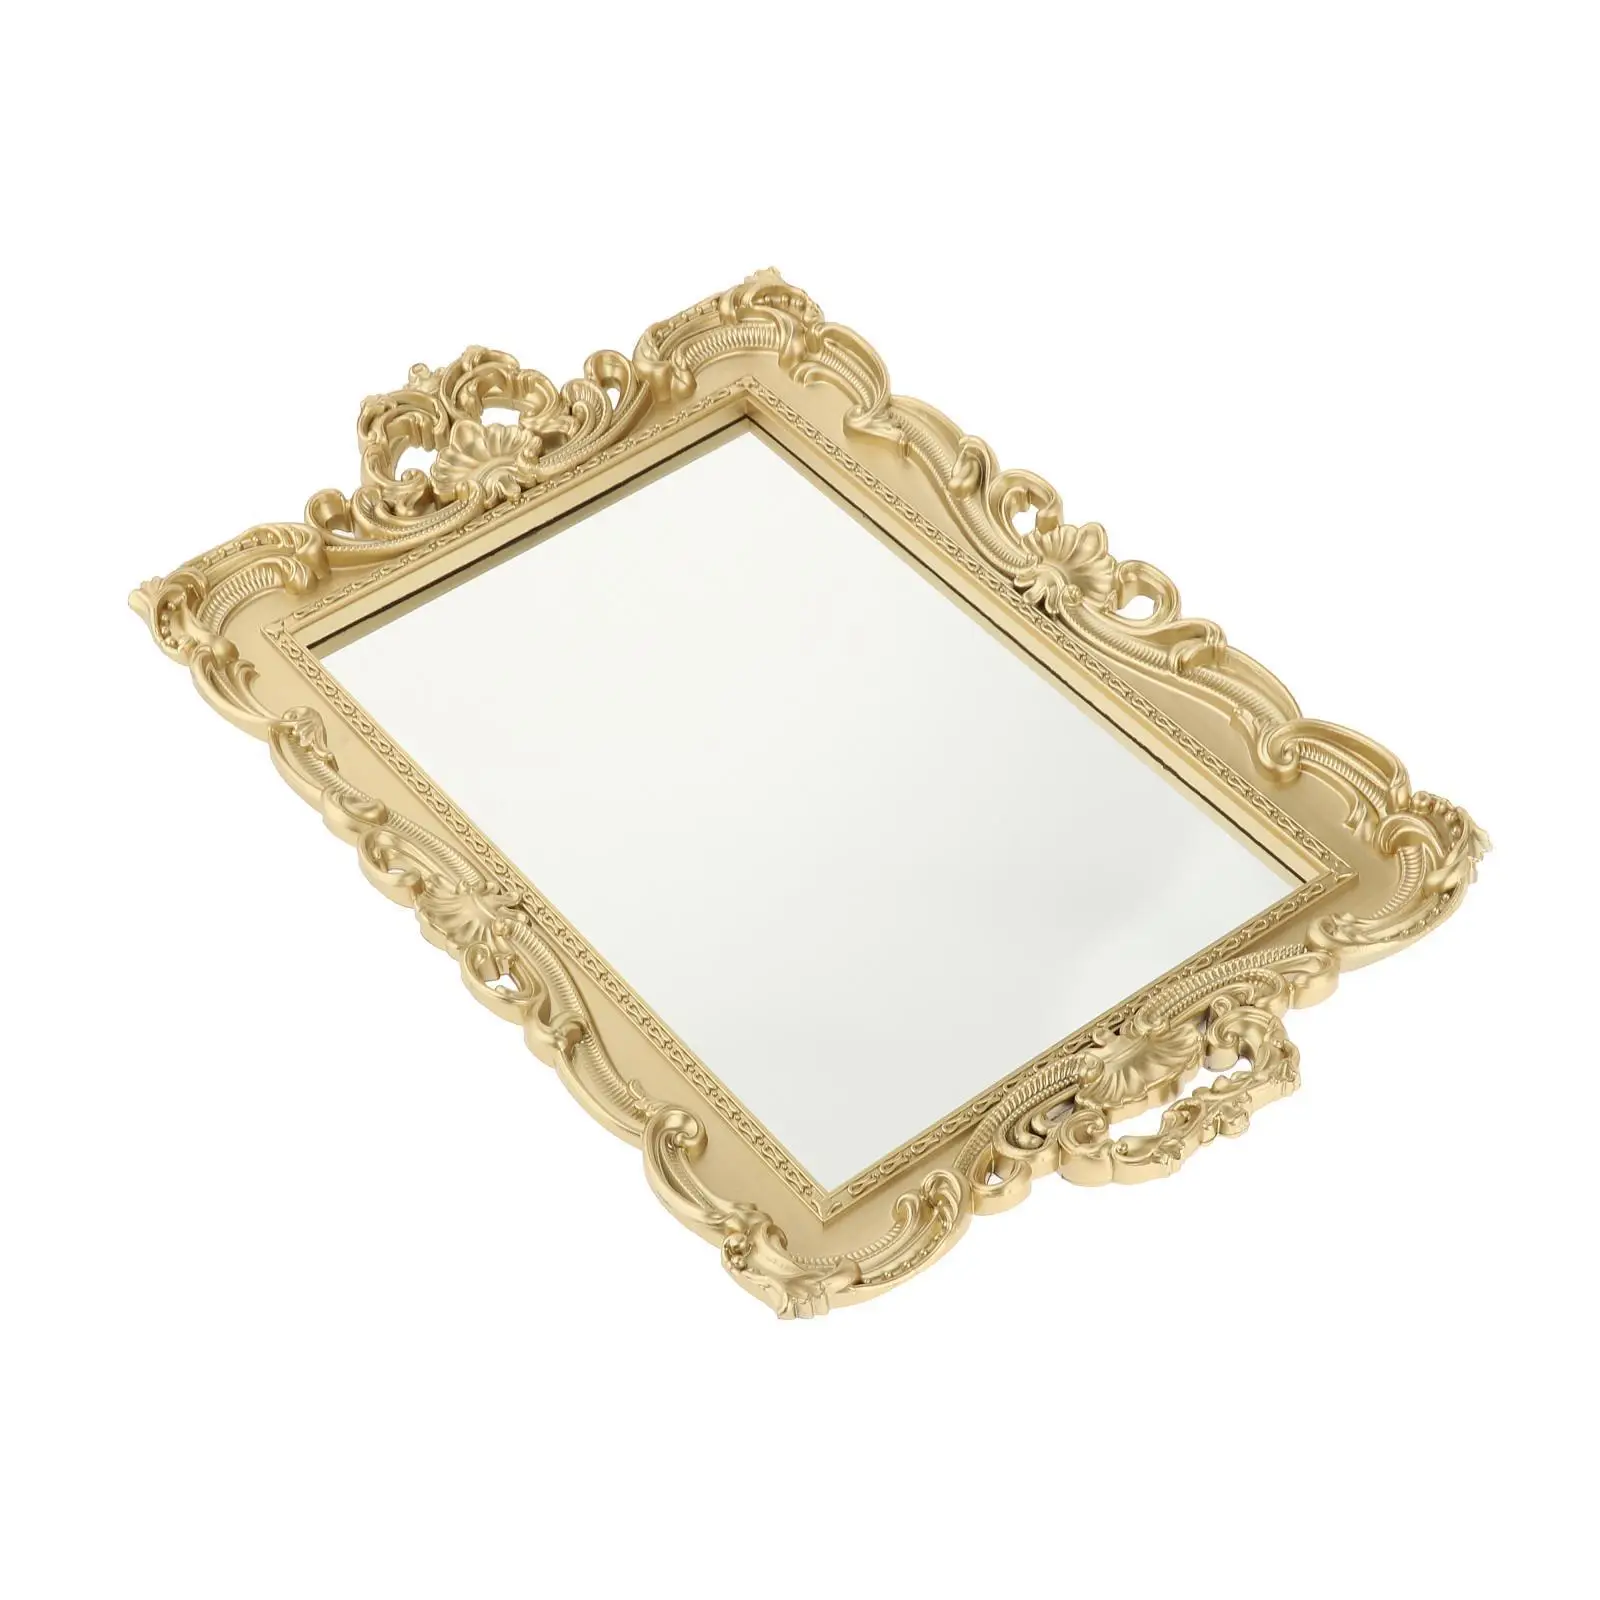  Mirrored Vanity Display Tray Makeup Mirror Case Jewelry Cosmetic Perfume Organizer Photo Props Desktop Ornaments